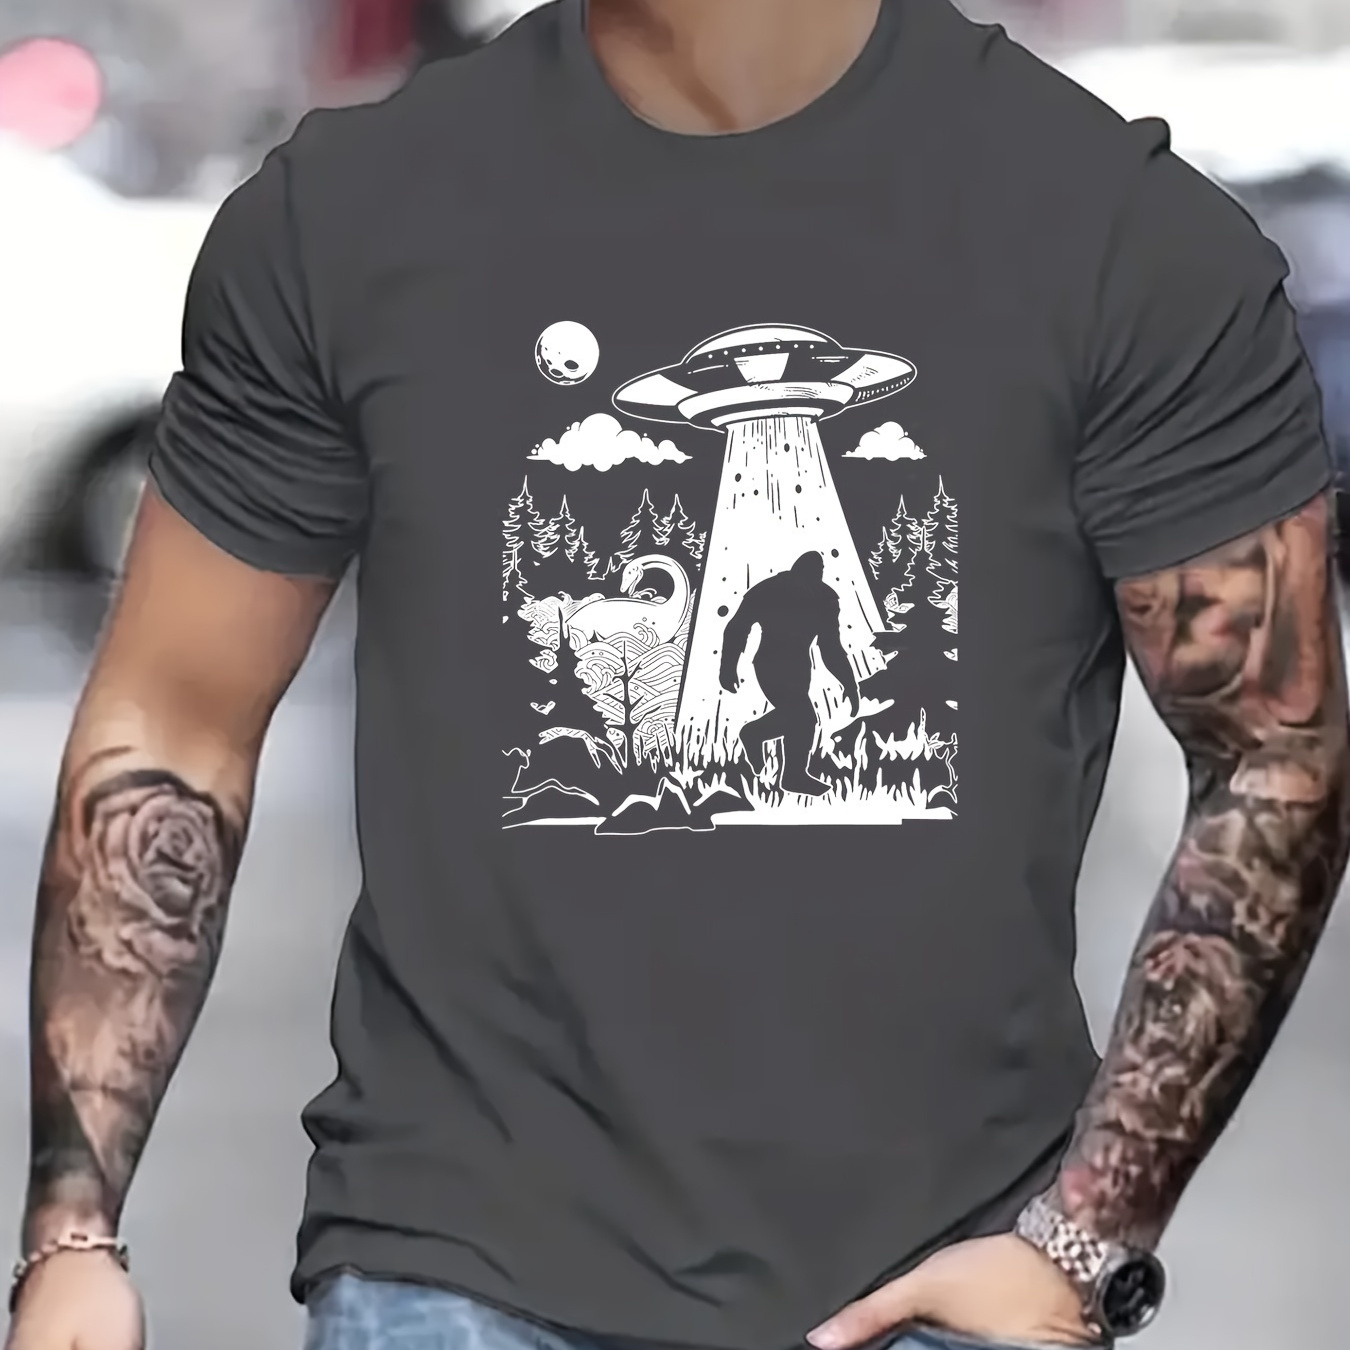 

Ufo Print Men's Casual T-shirt, Short Sleeve Tee Tops, Summer Outdoor Sports Clothing